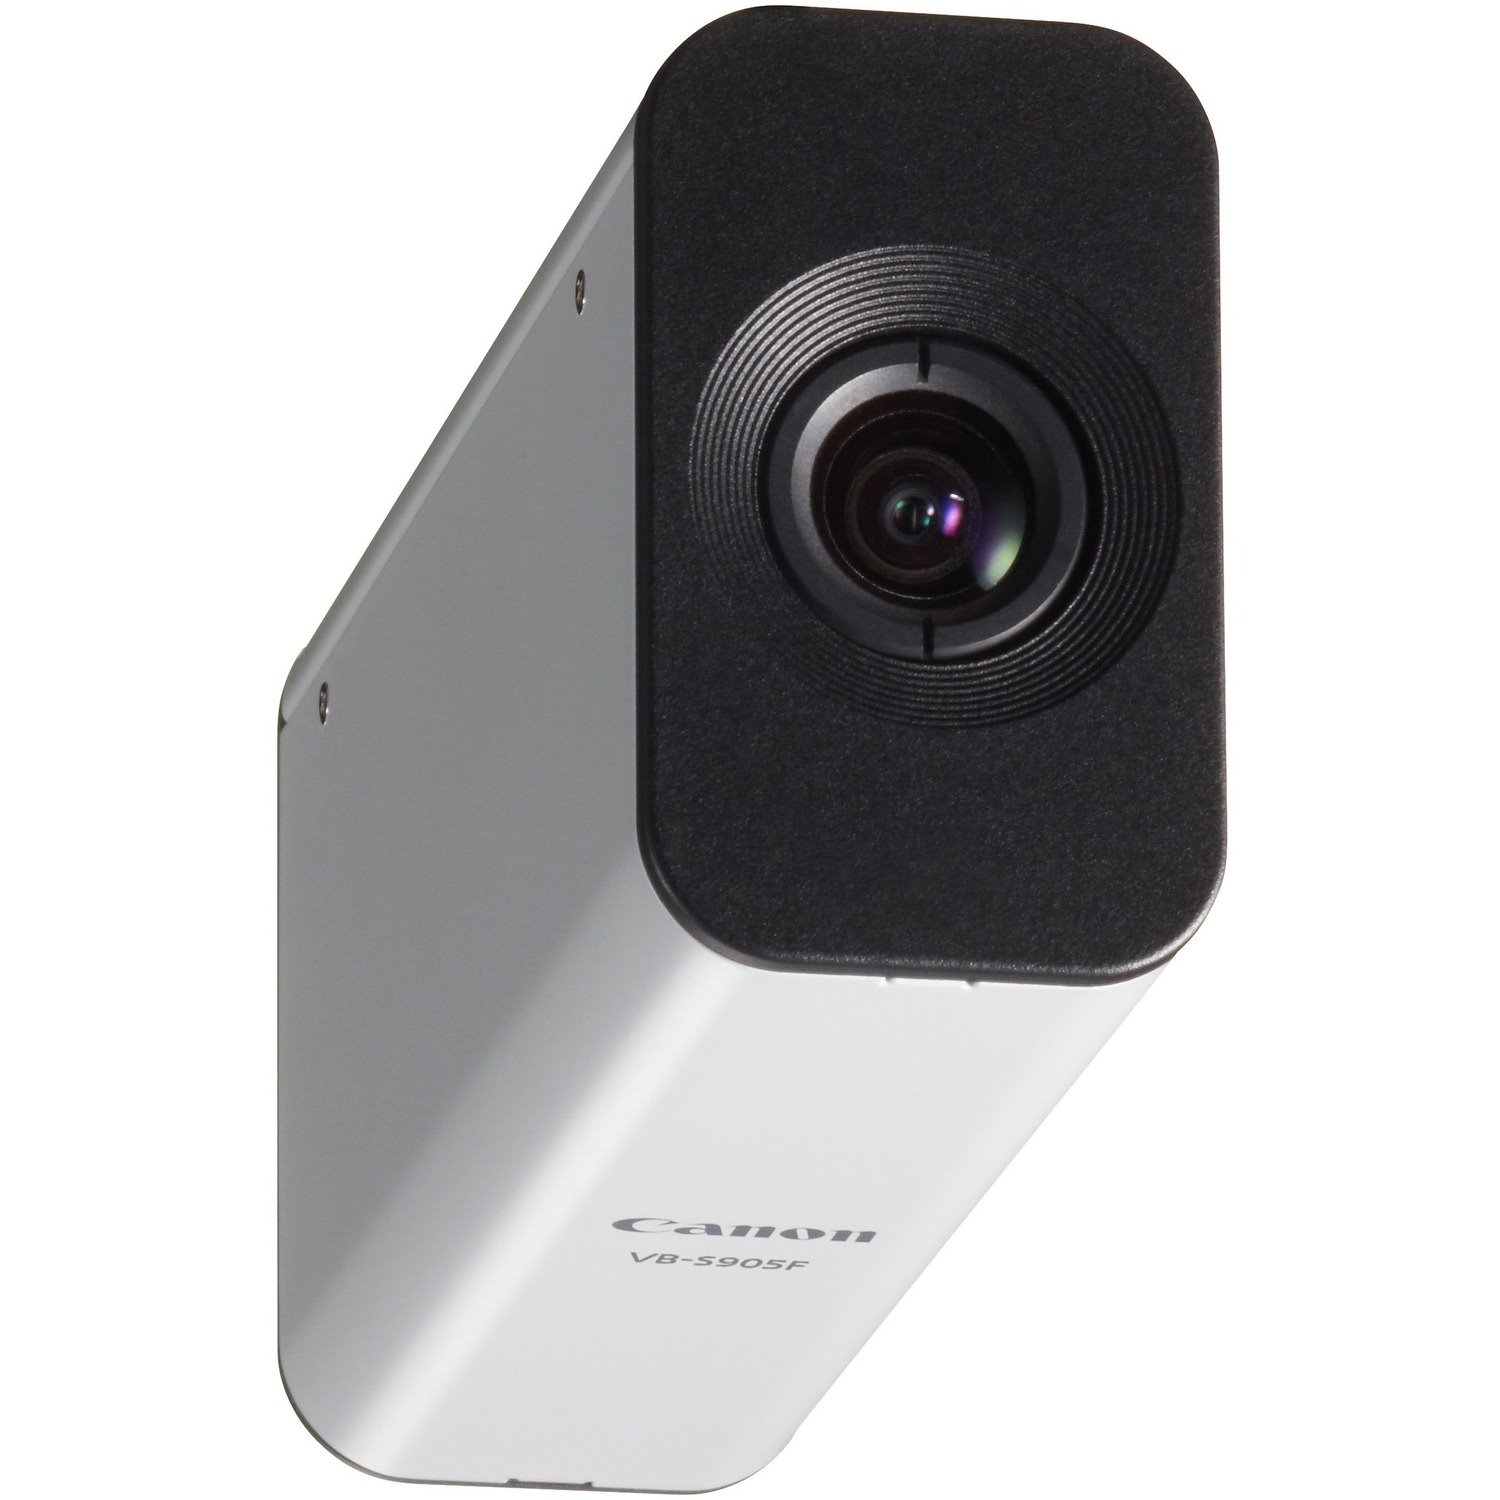 Canon VB-S905F 1.3 Megapixel HD Network Camera - Colour - Box